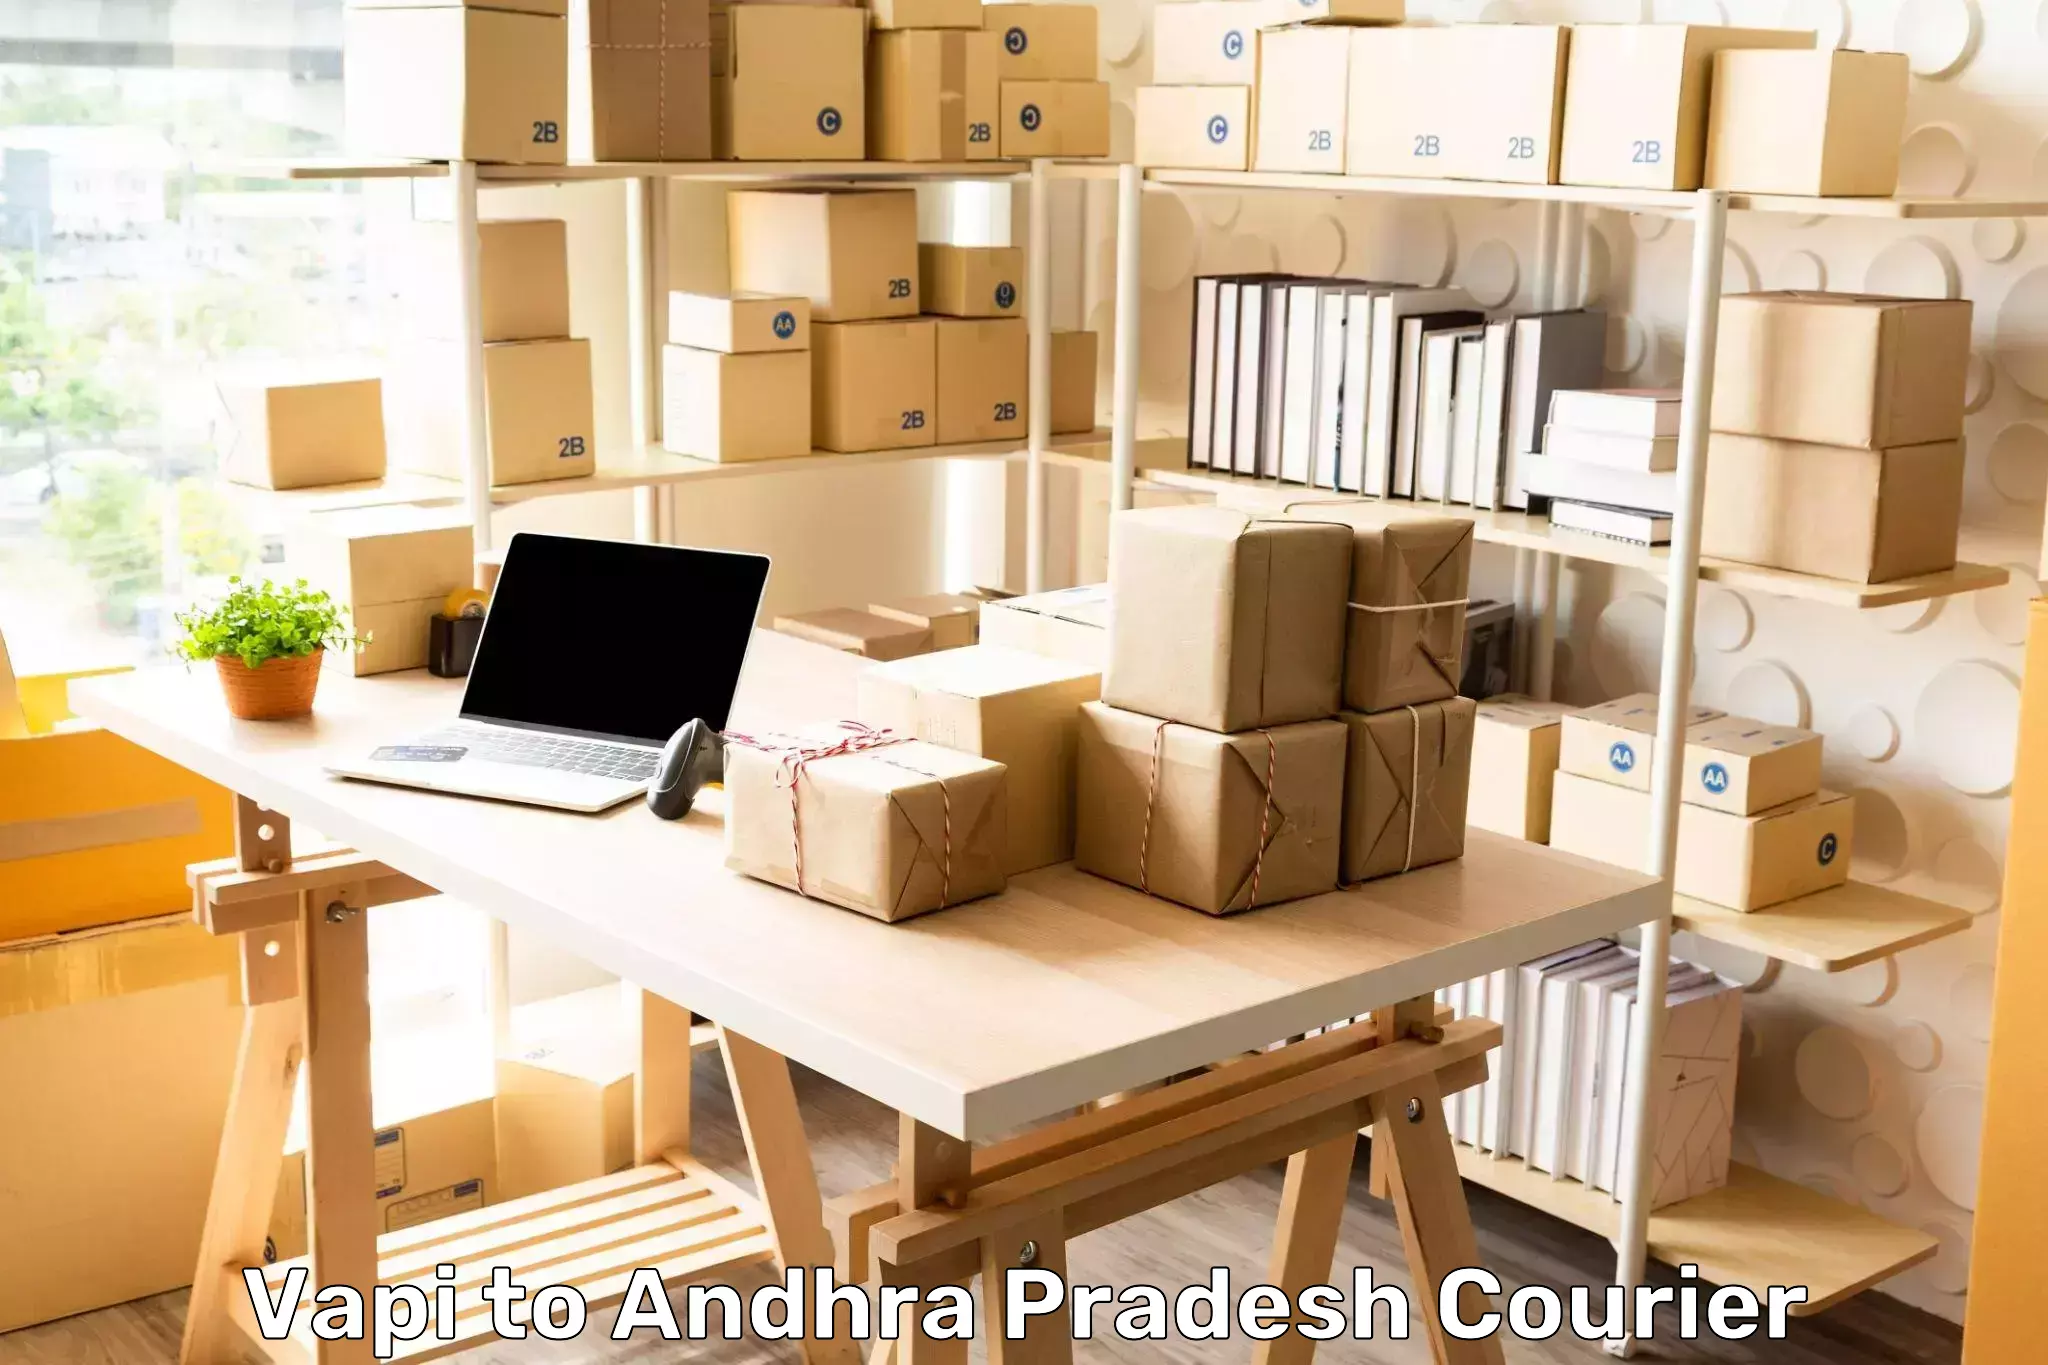 Round-the-clock parcel delivery Vapi to Andhra Pradesh